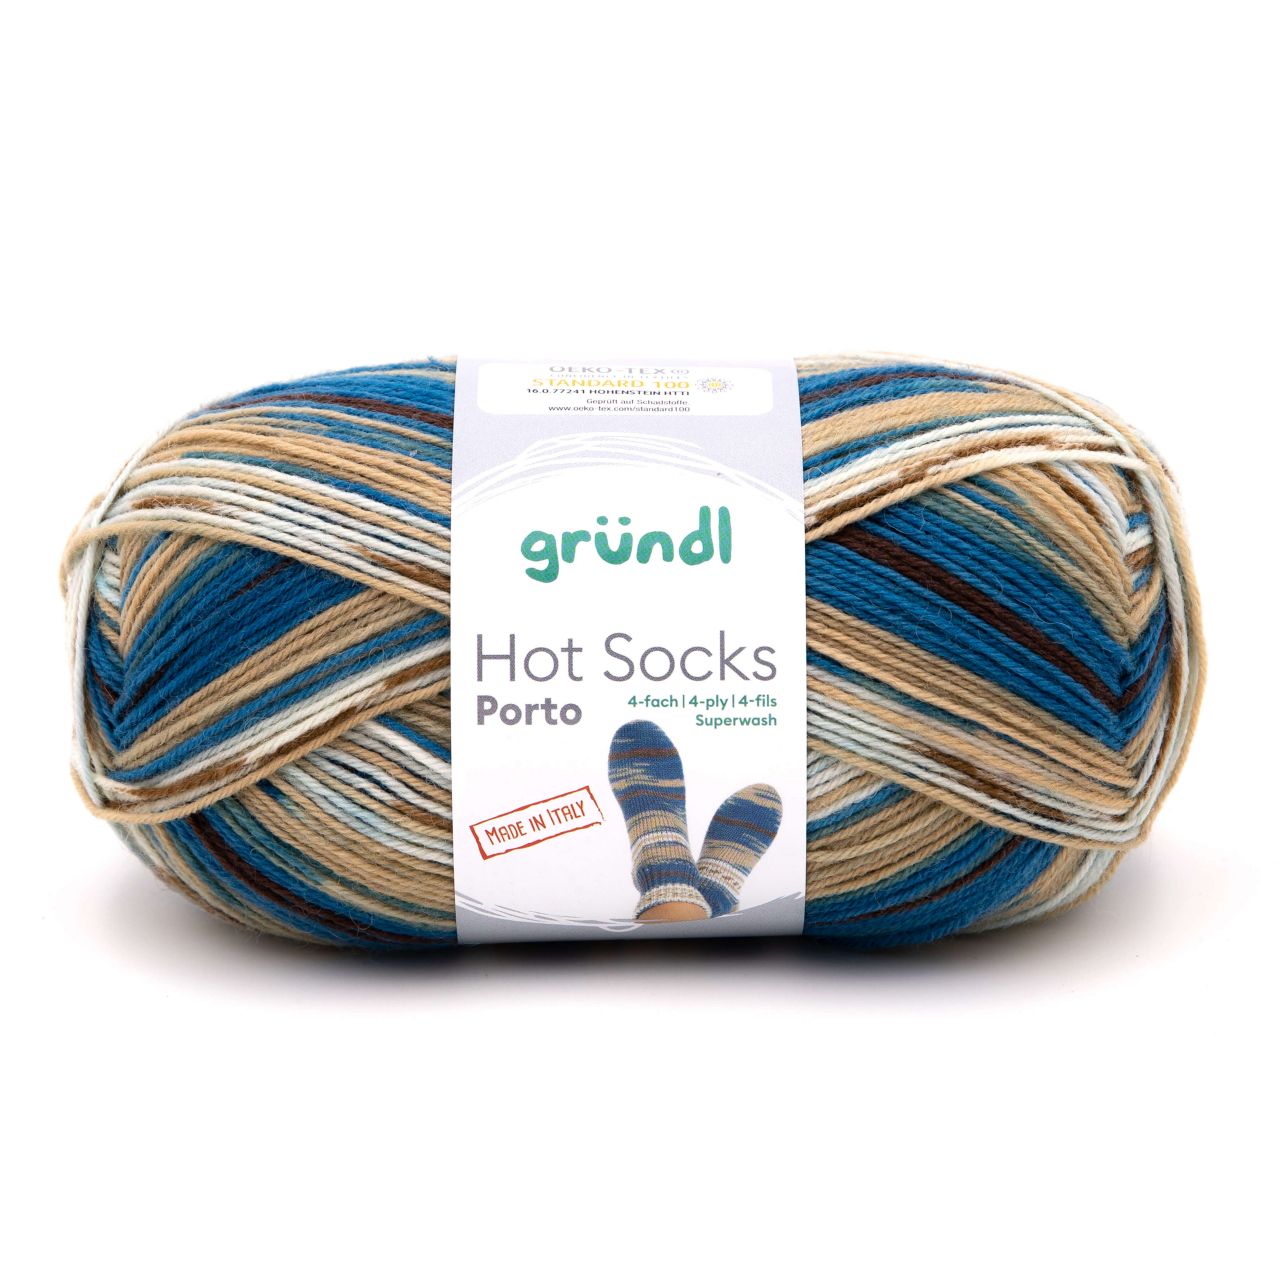 Gründl Sockenwolle Hot Socks Porto 100 g 4-fach aqua-teddy-kamel-natur von gründl